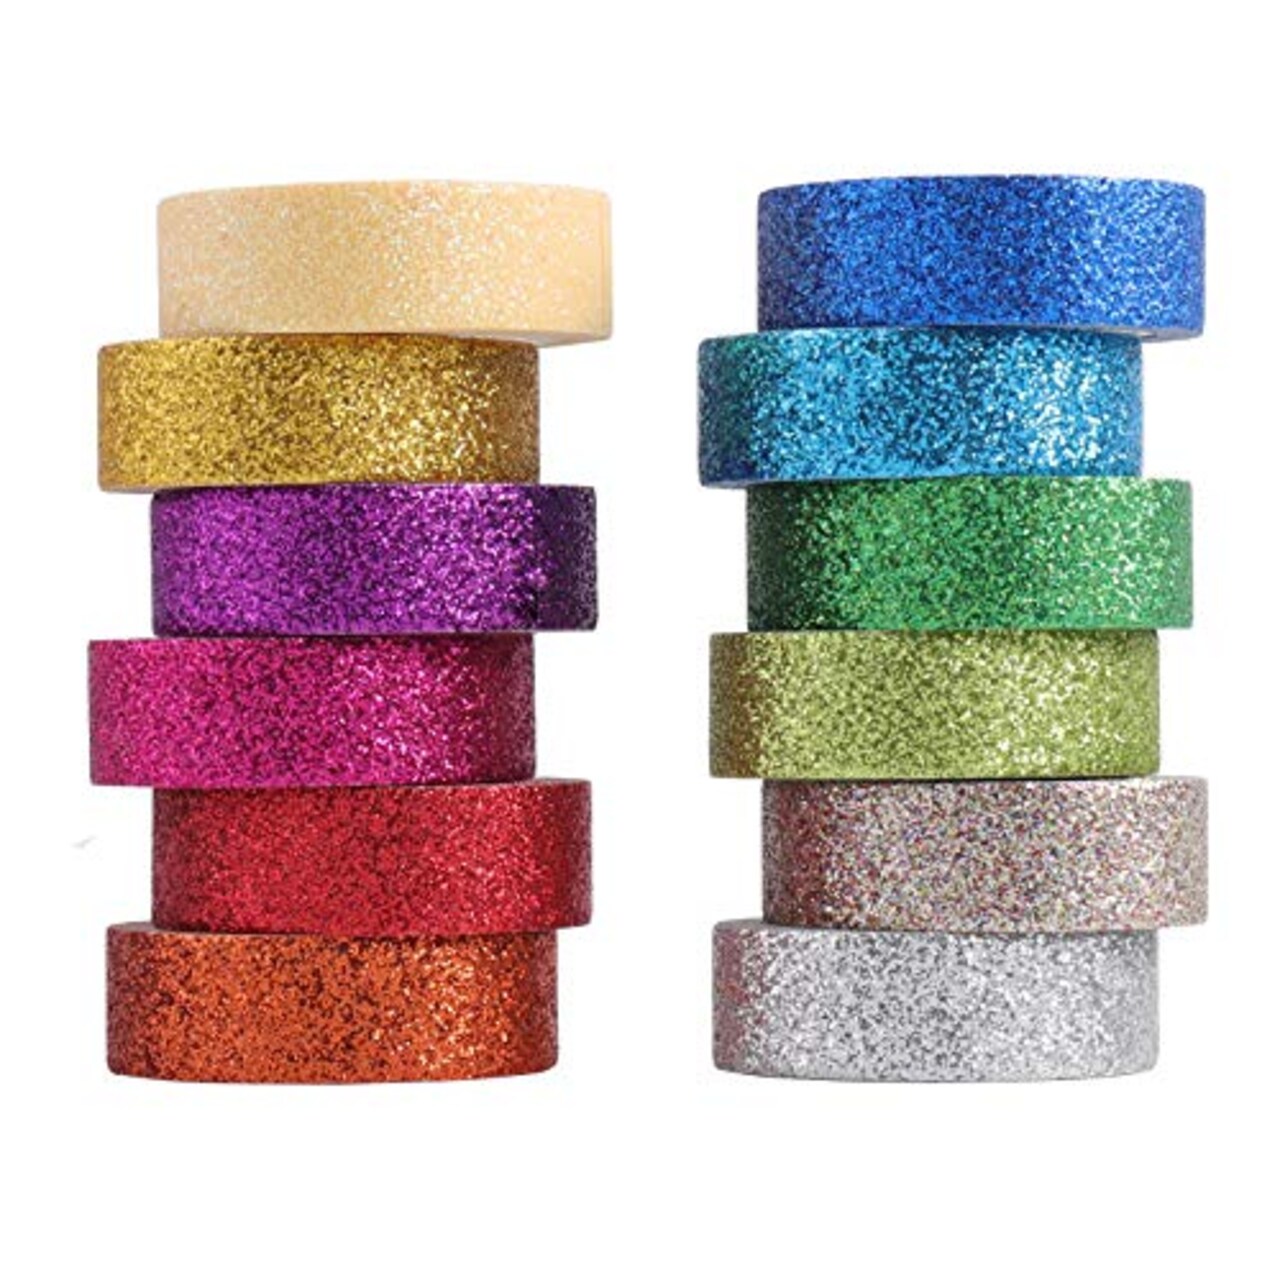 Tesuivra DIY Glitter Washi Tape Set - 12 Rolls Colored Masking